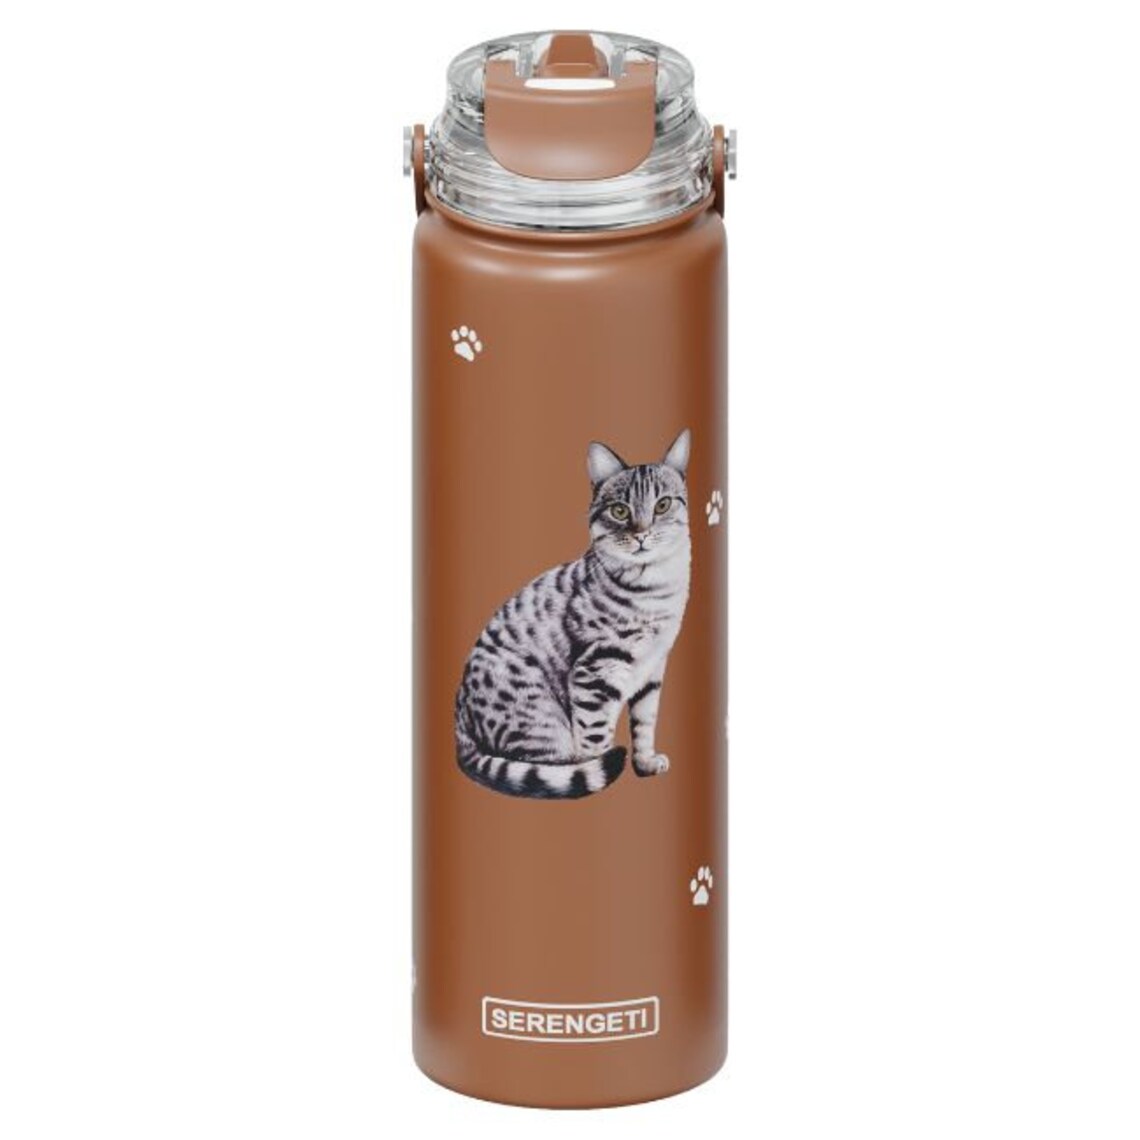 SERENGETI Stainless Steel Water Bottle 24oz - Tabby Silver Cat